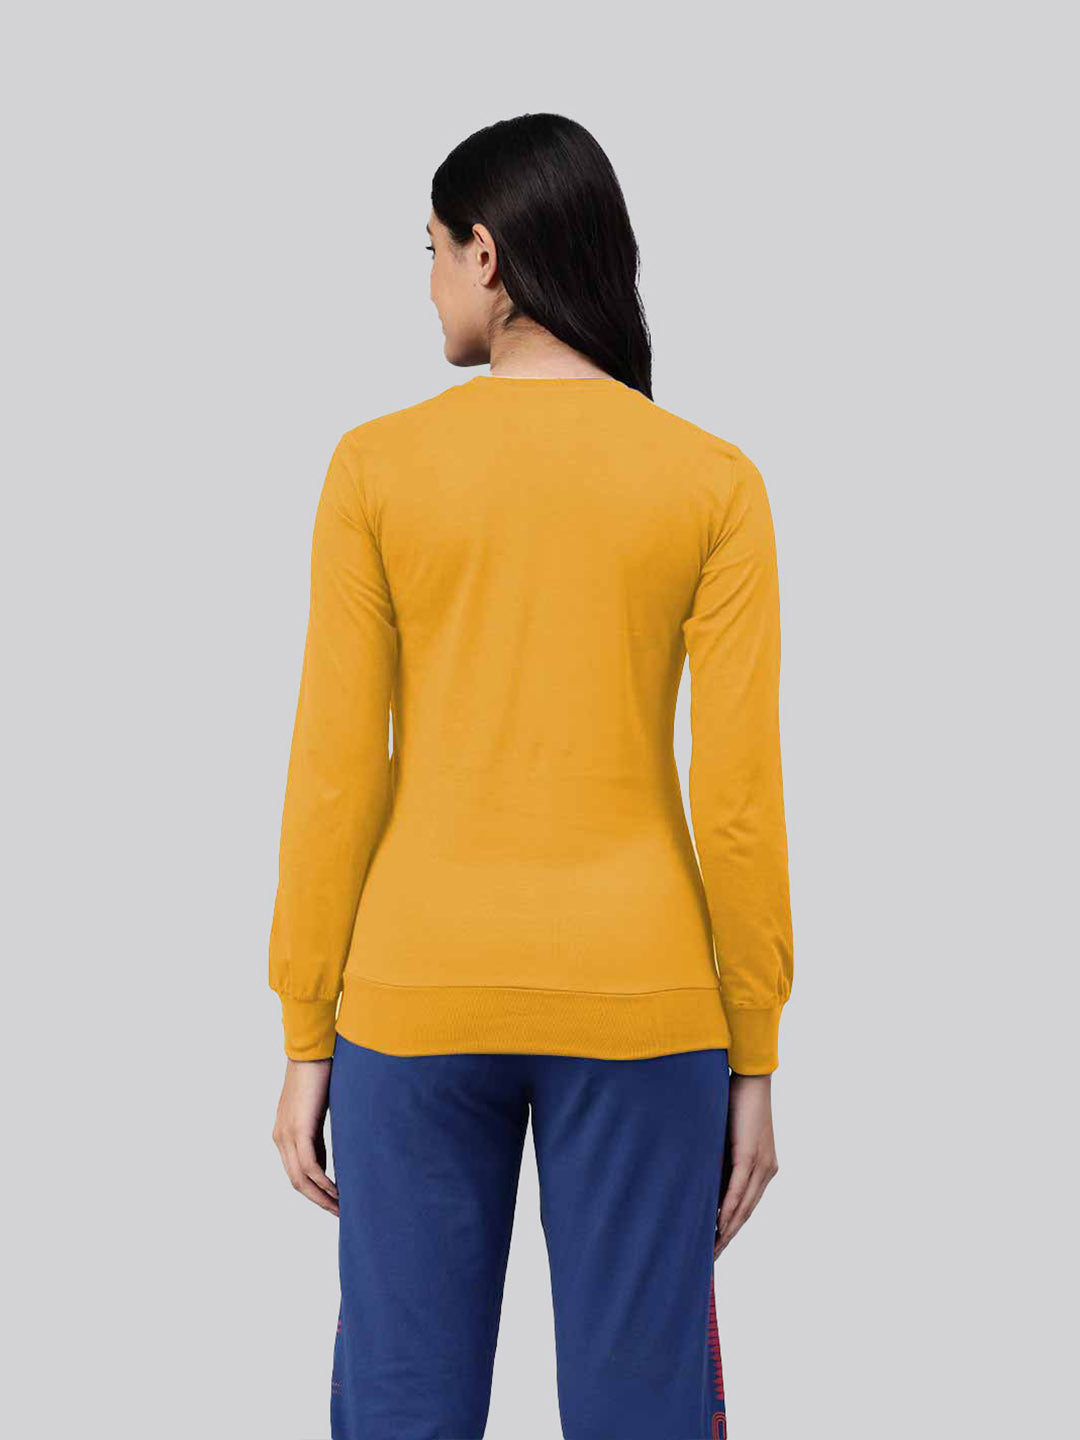 Yellow round neck t- shirt for women